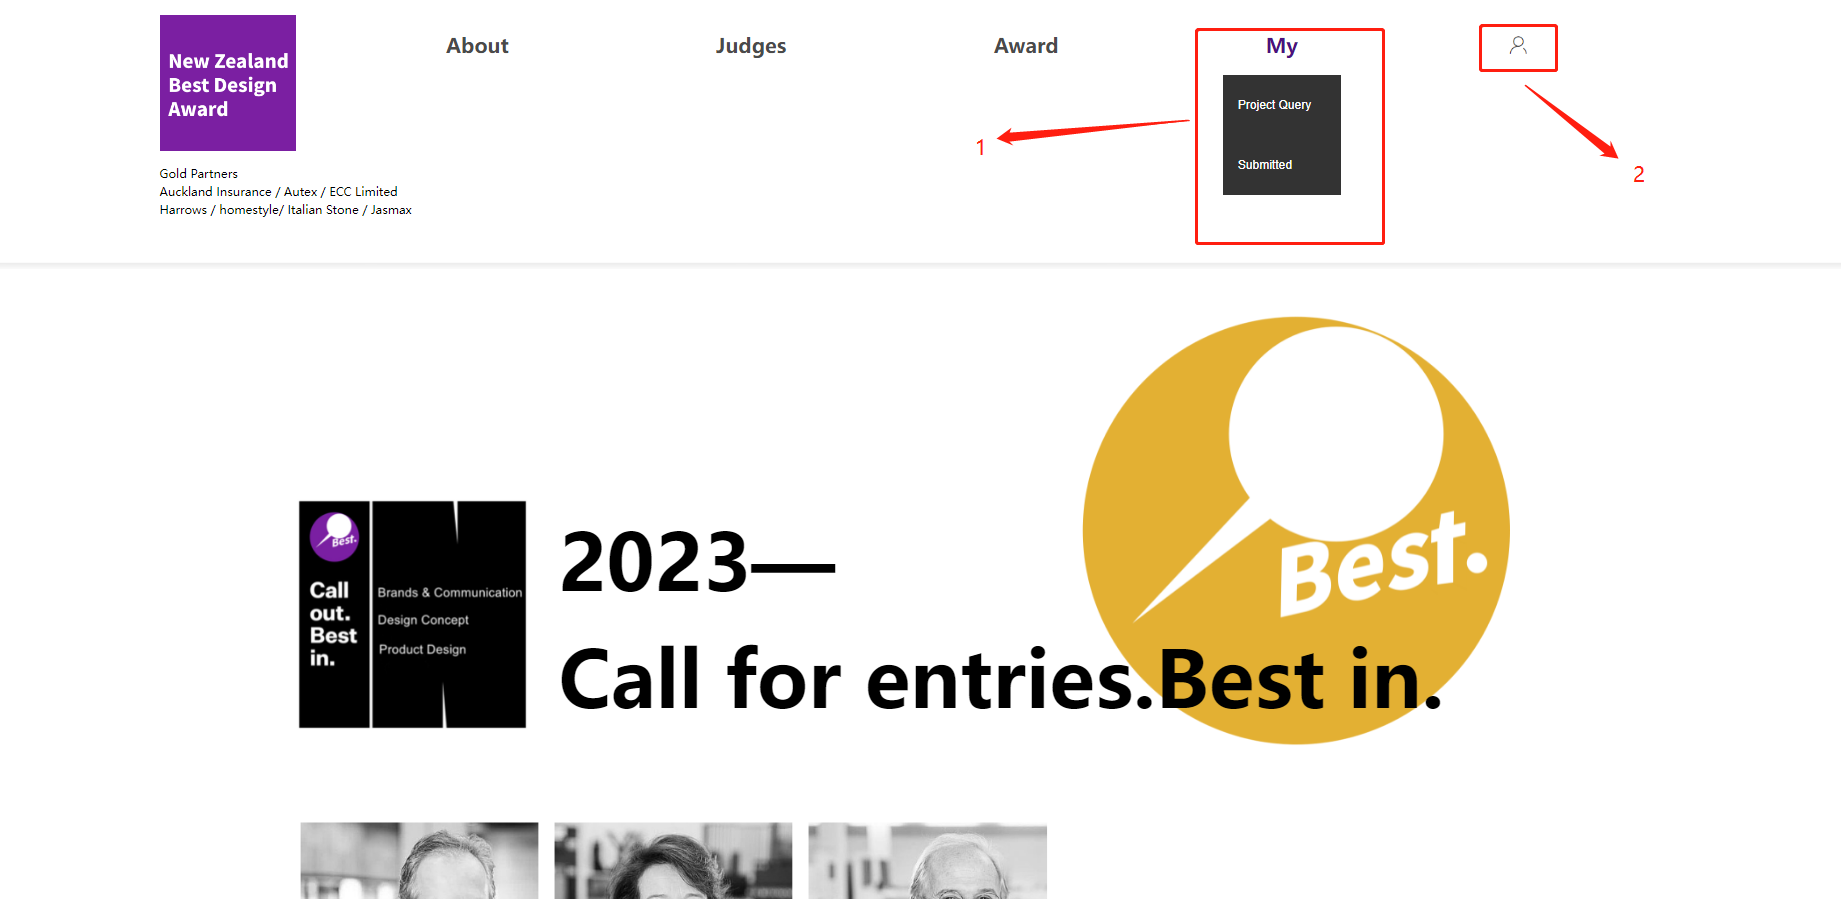 New Zealand Best Design Award Contest System User Manual